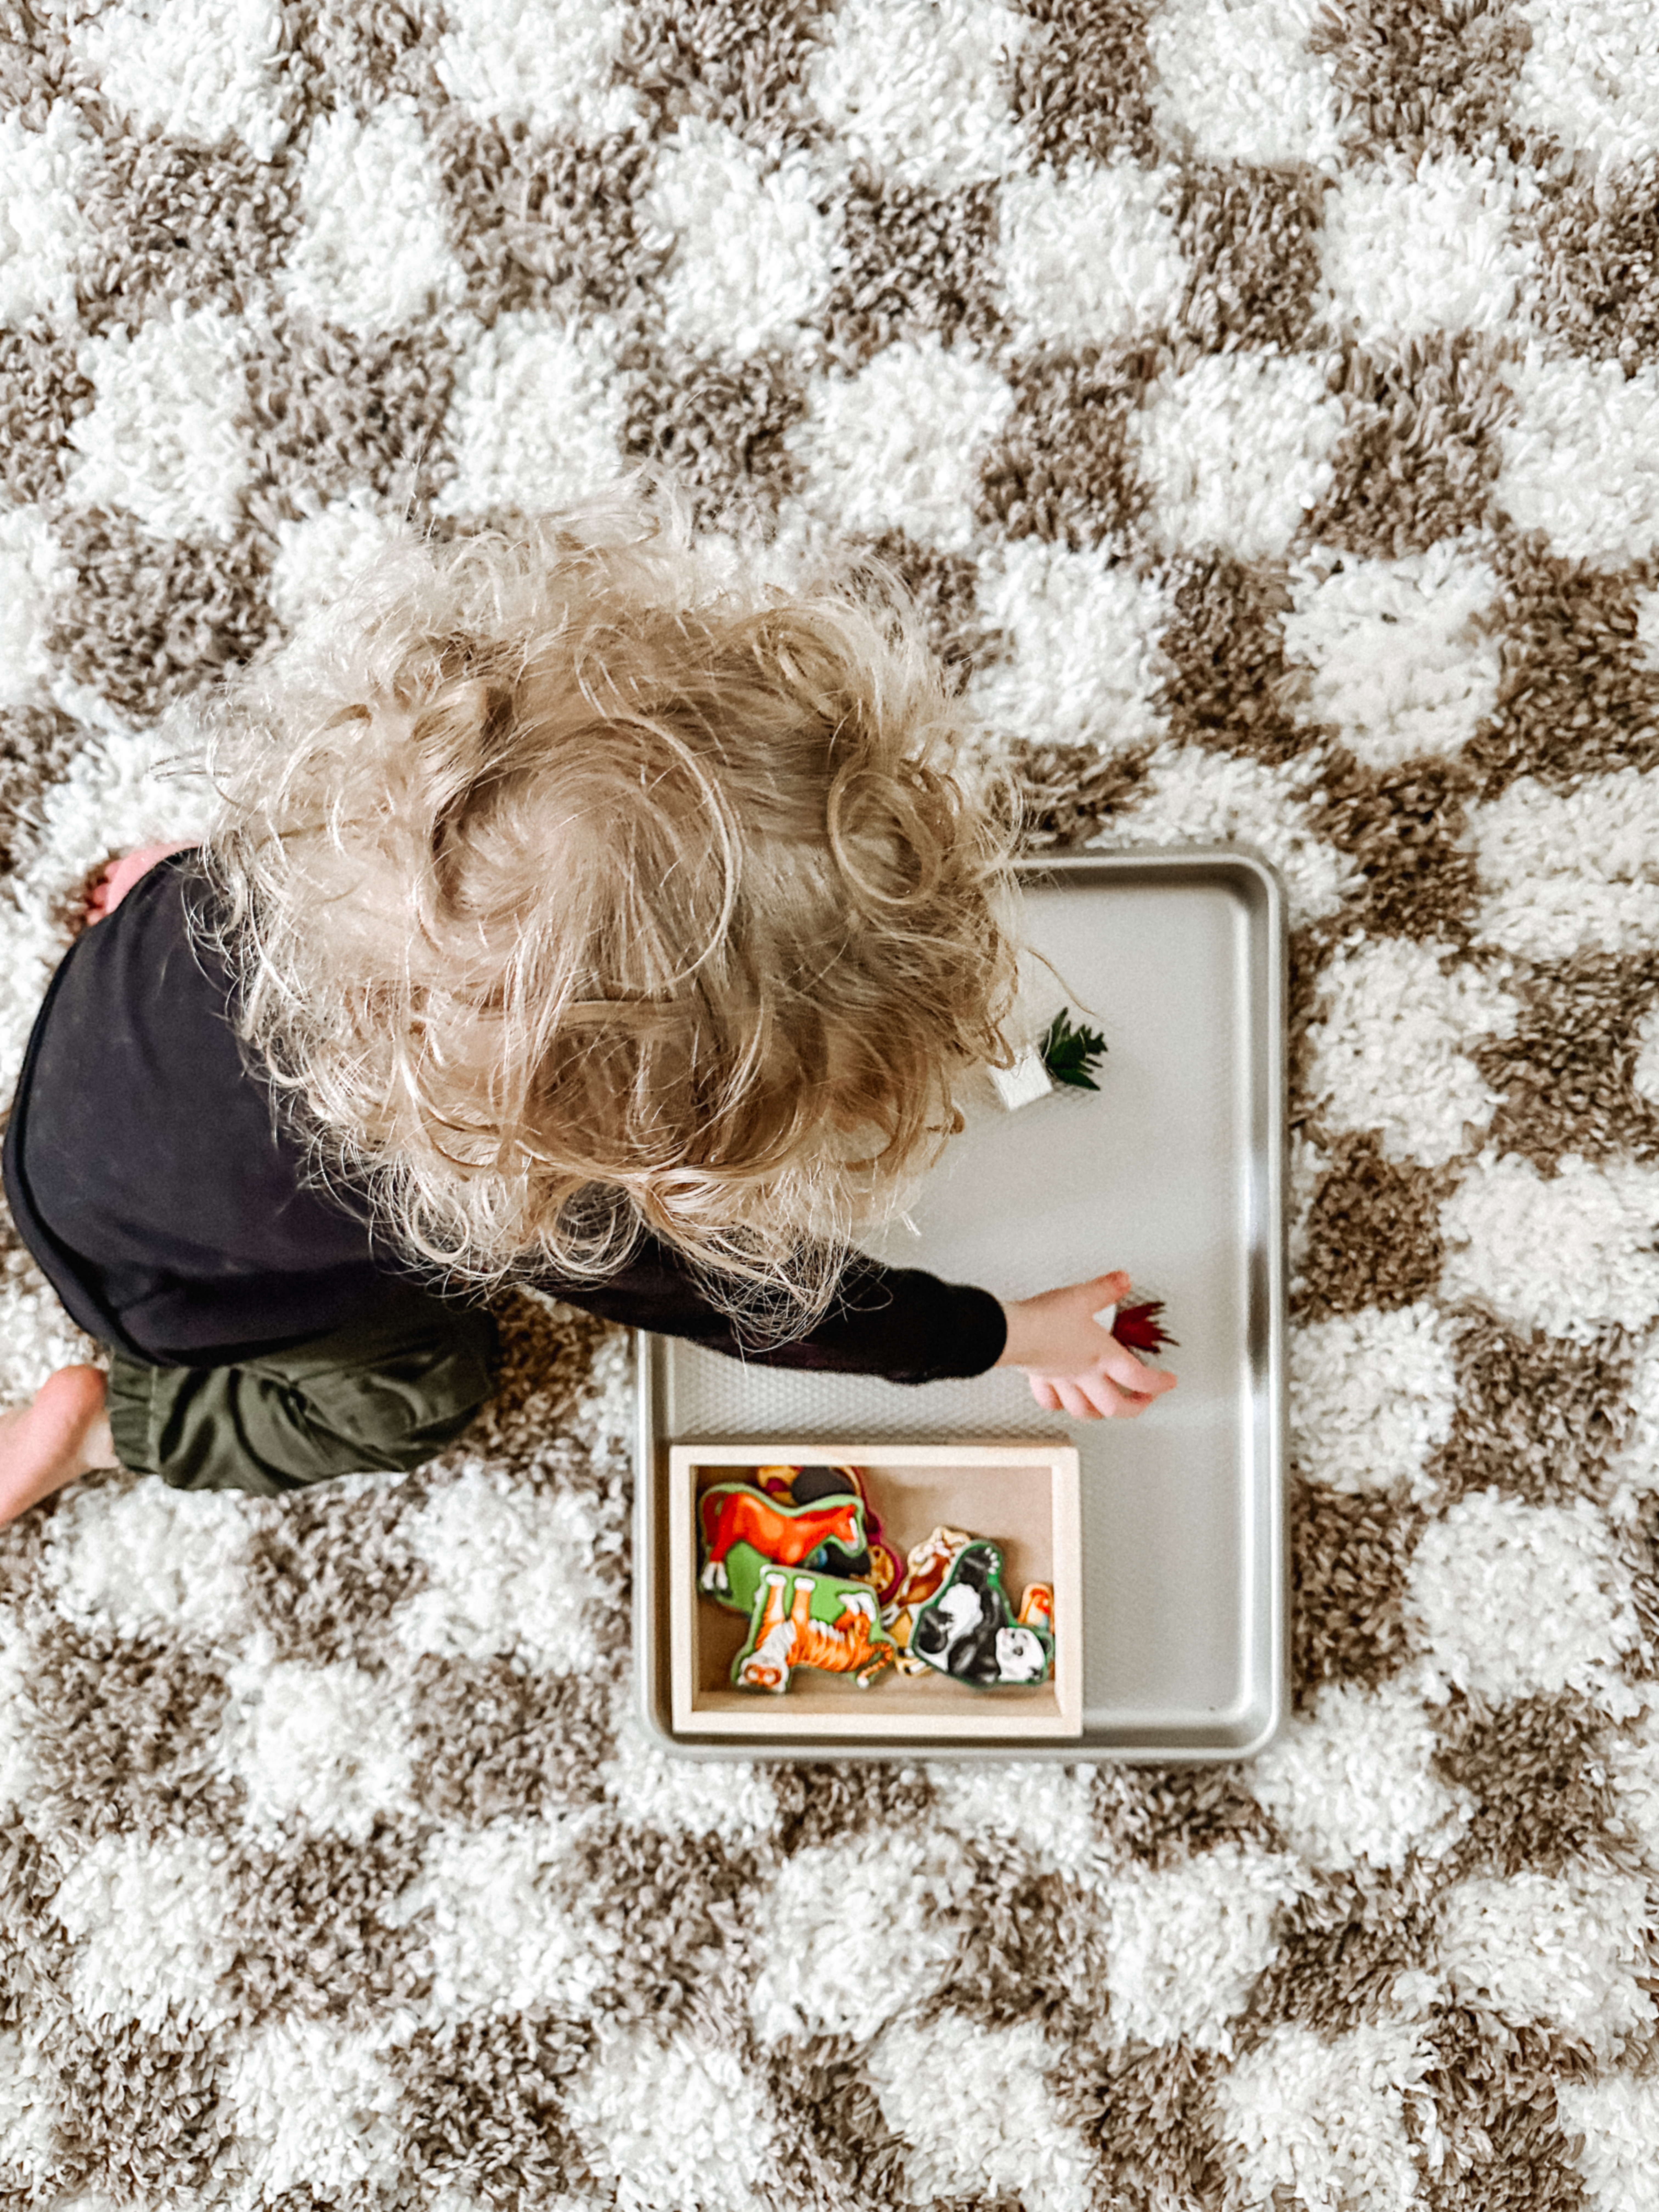 Sensory Play Activity: Magnetic Baking Sheet Toddler playing with magnetics on baking sheet.